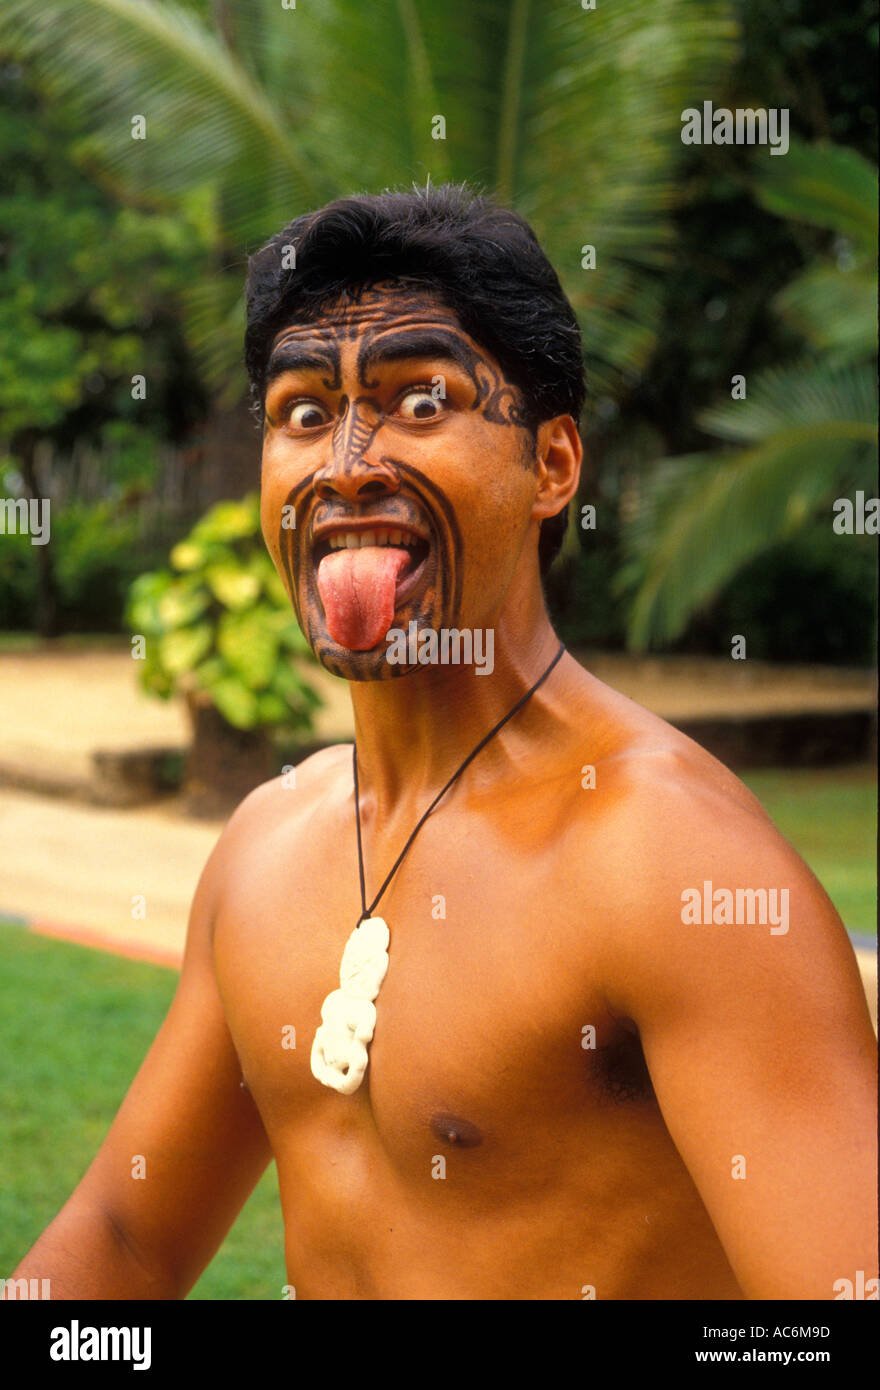 Maori man, student, guide, Maori village, Polynesian Cultural Center, Laie, Oahu Island, Hawaii, United States, MR Stock Photo